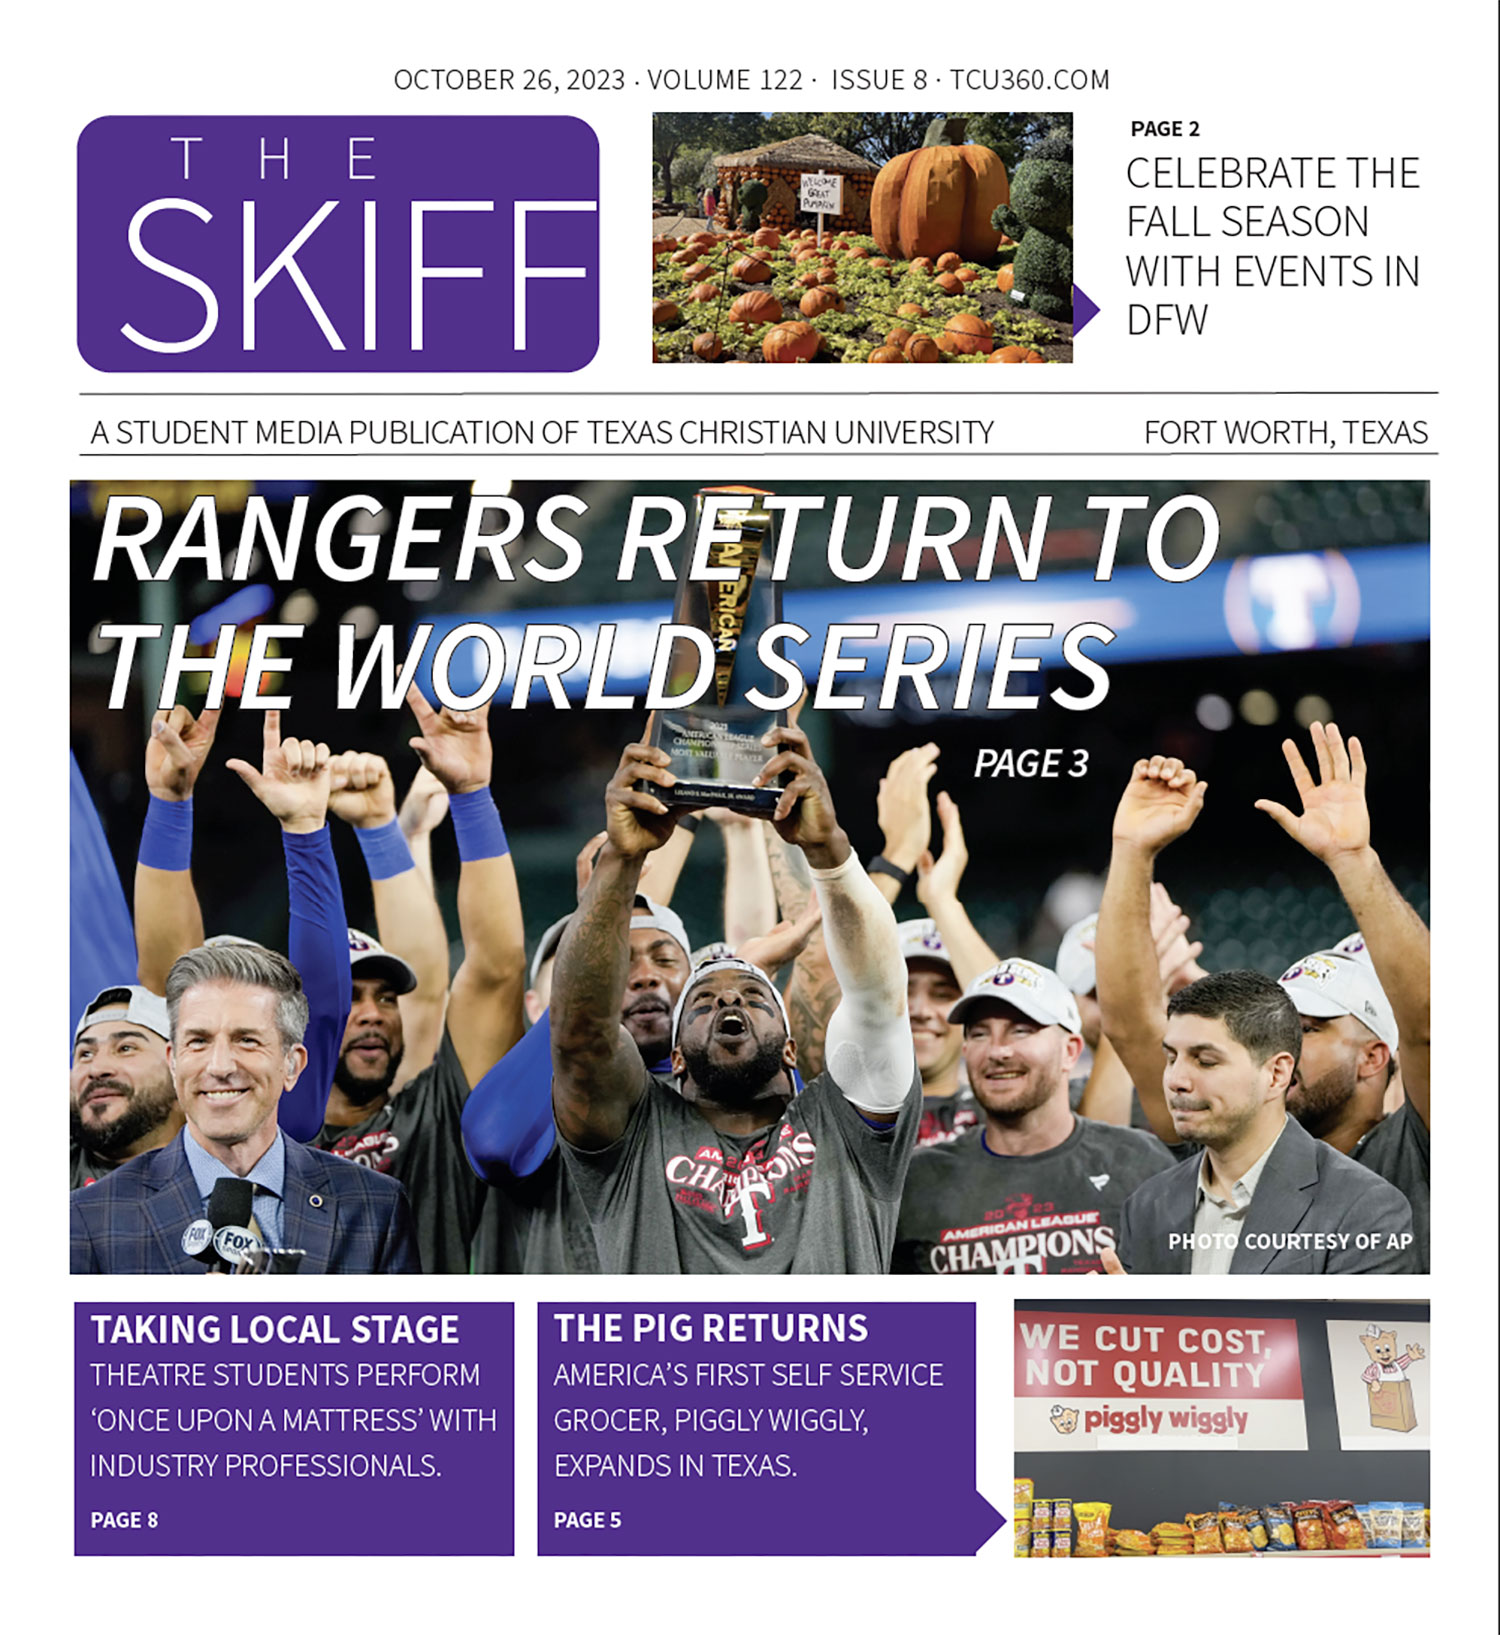 The Skiff: Rangers return to the World Series